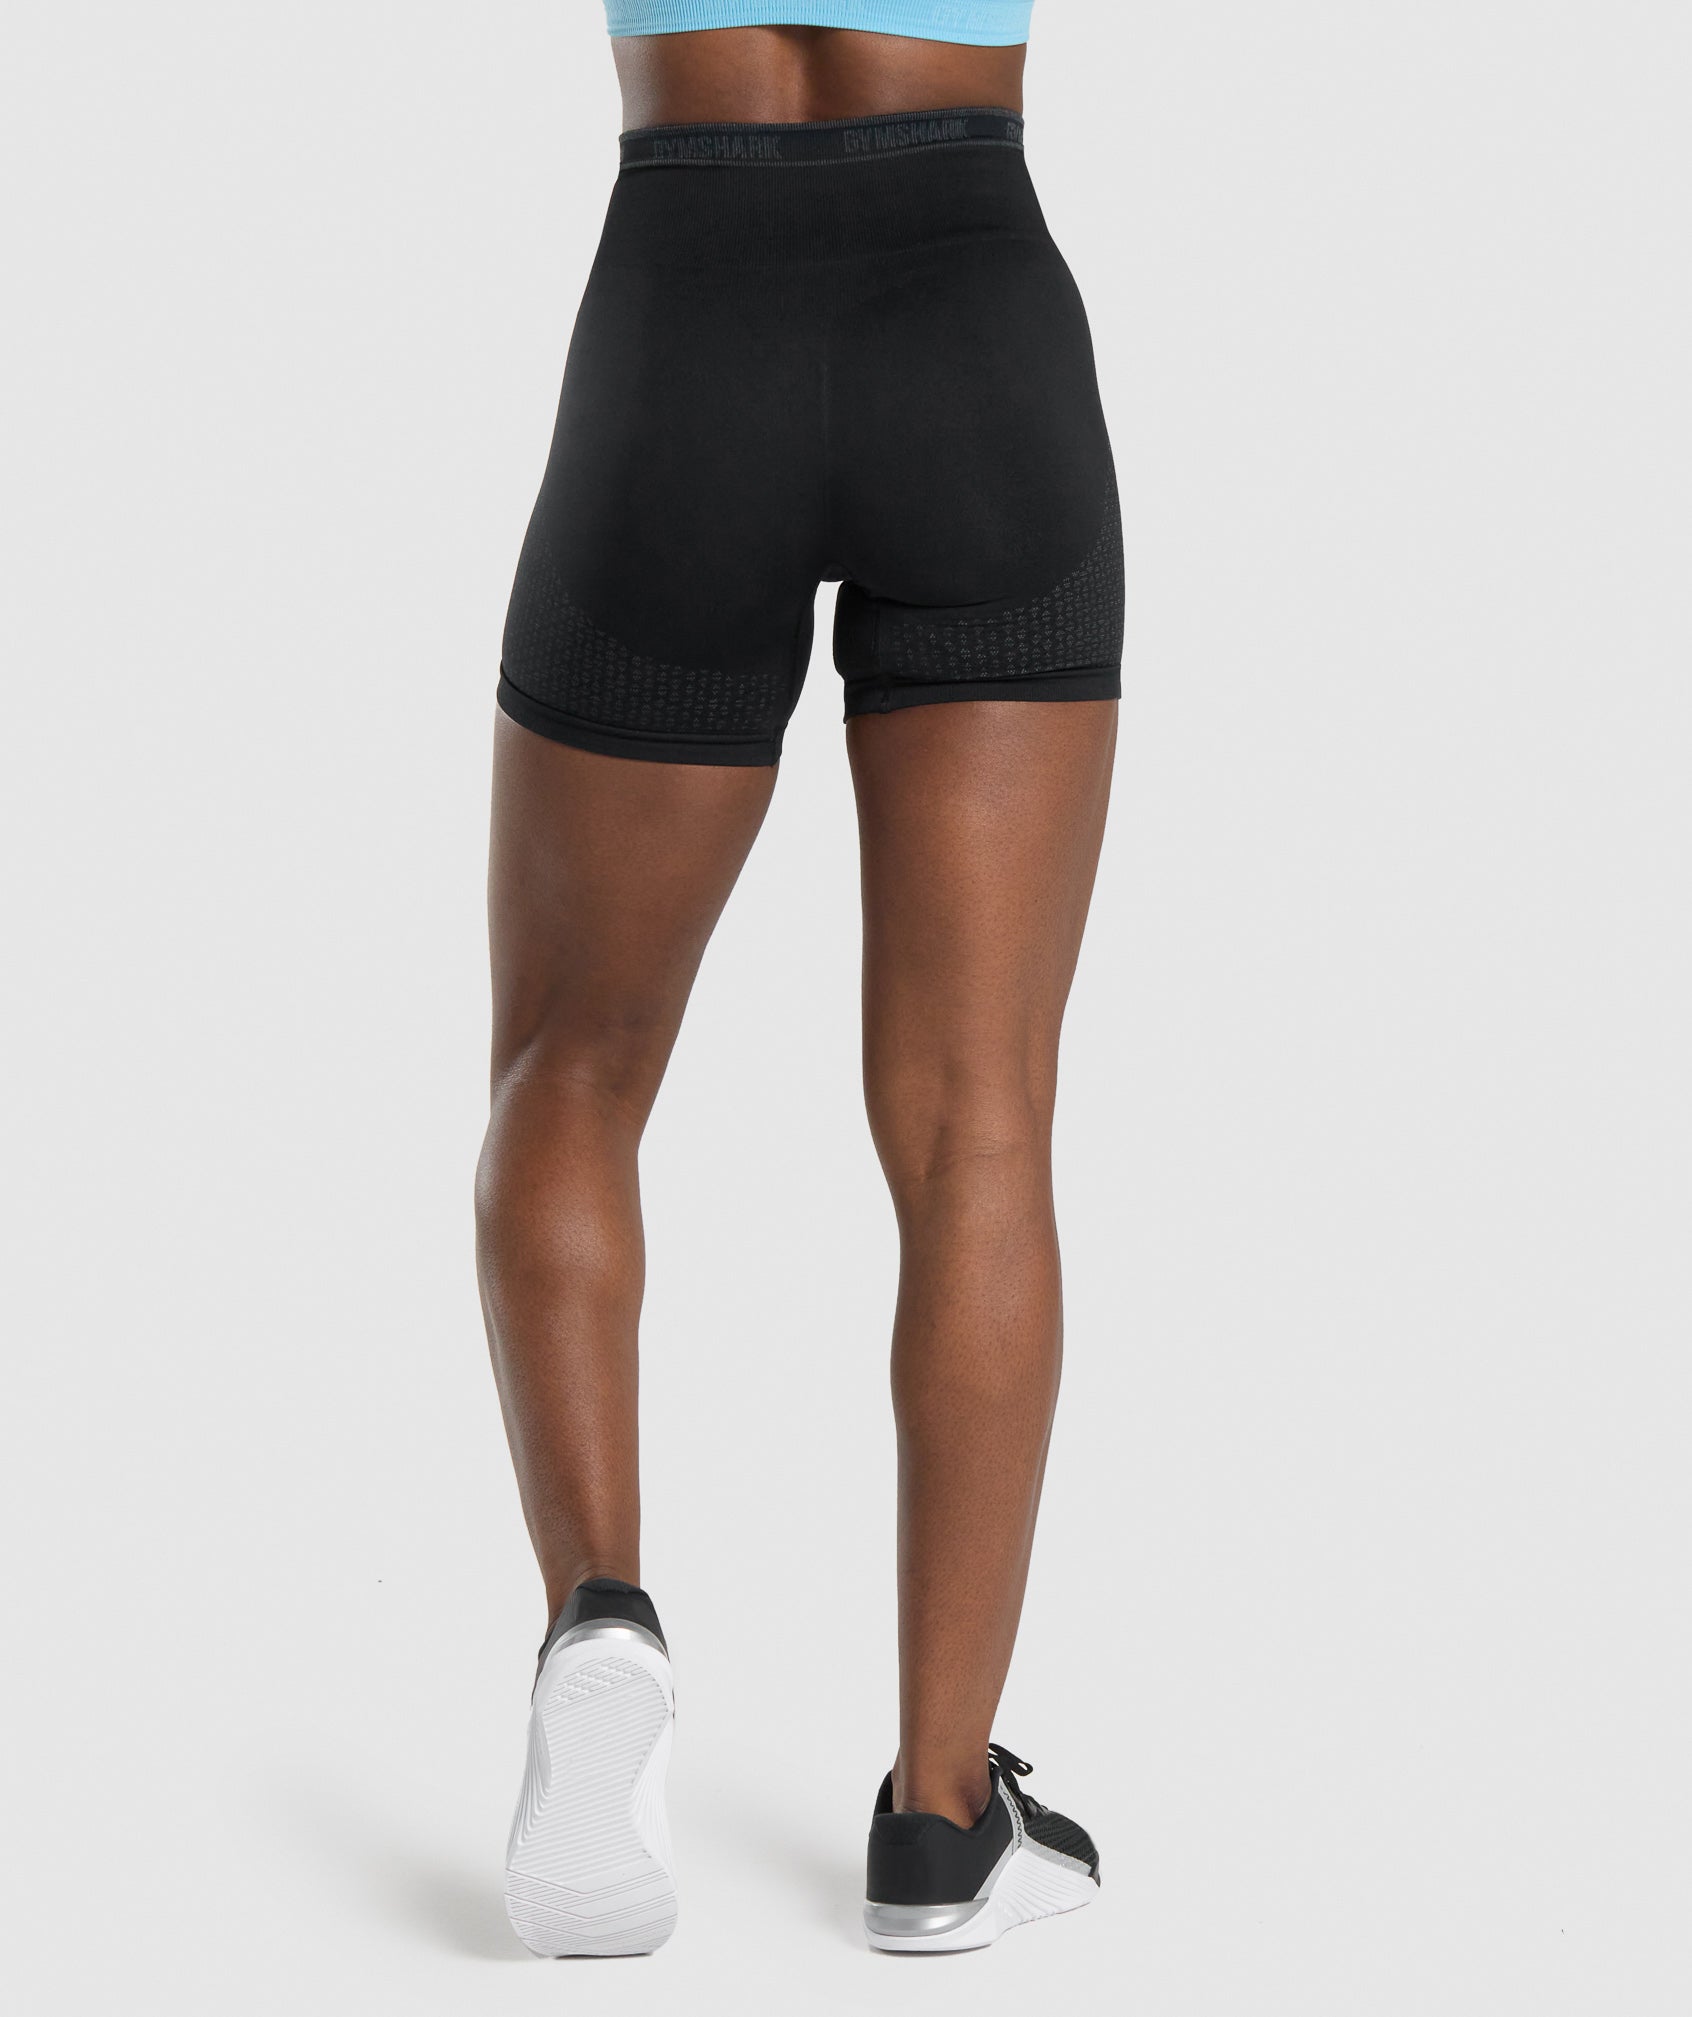 Apex Seamless Shorts in Black/Grey